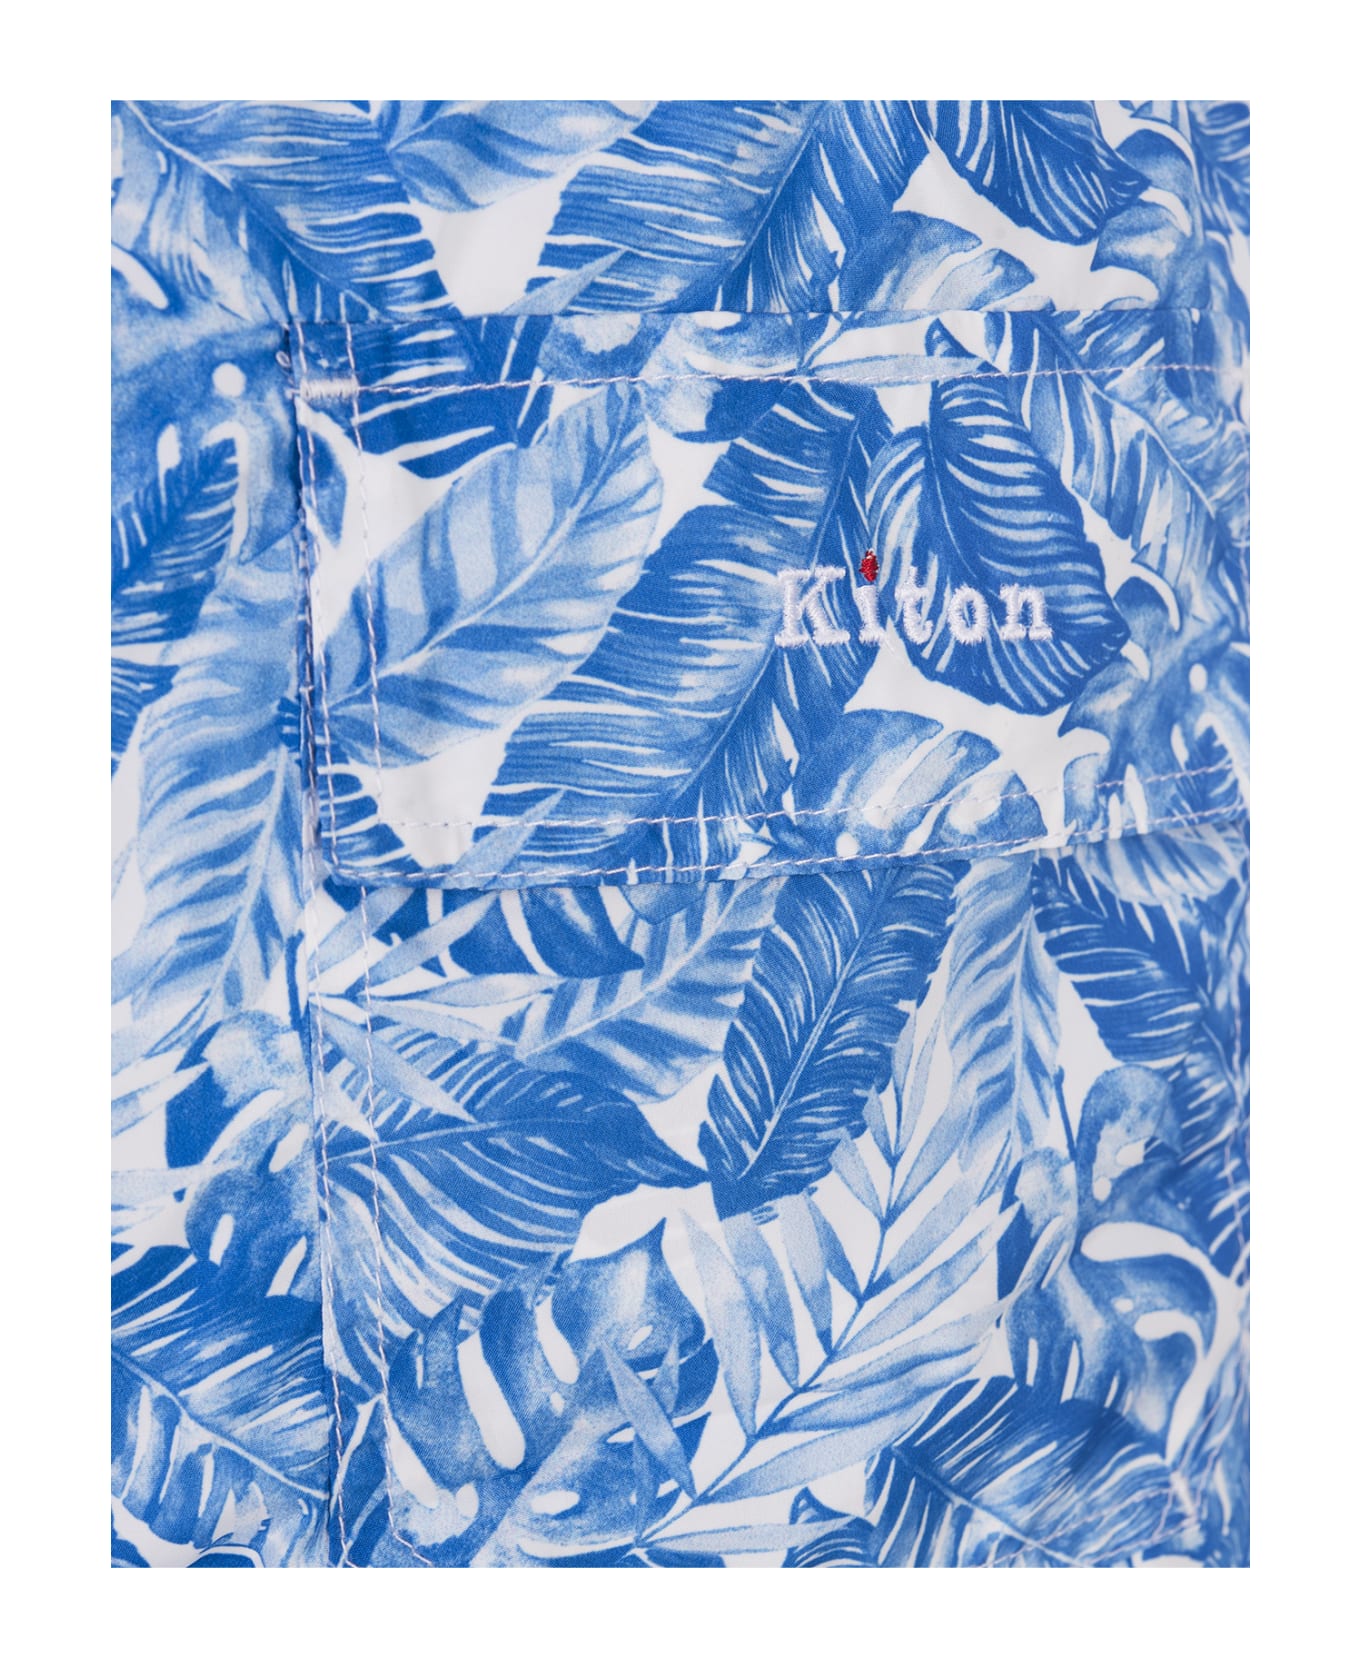 Kiton White Swim Shorts With Light Blue Foliage Print - Blue スイムトランクス